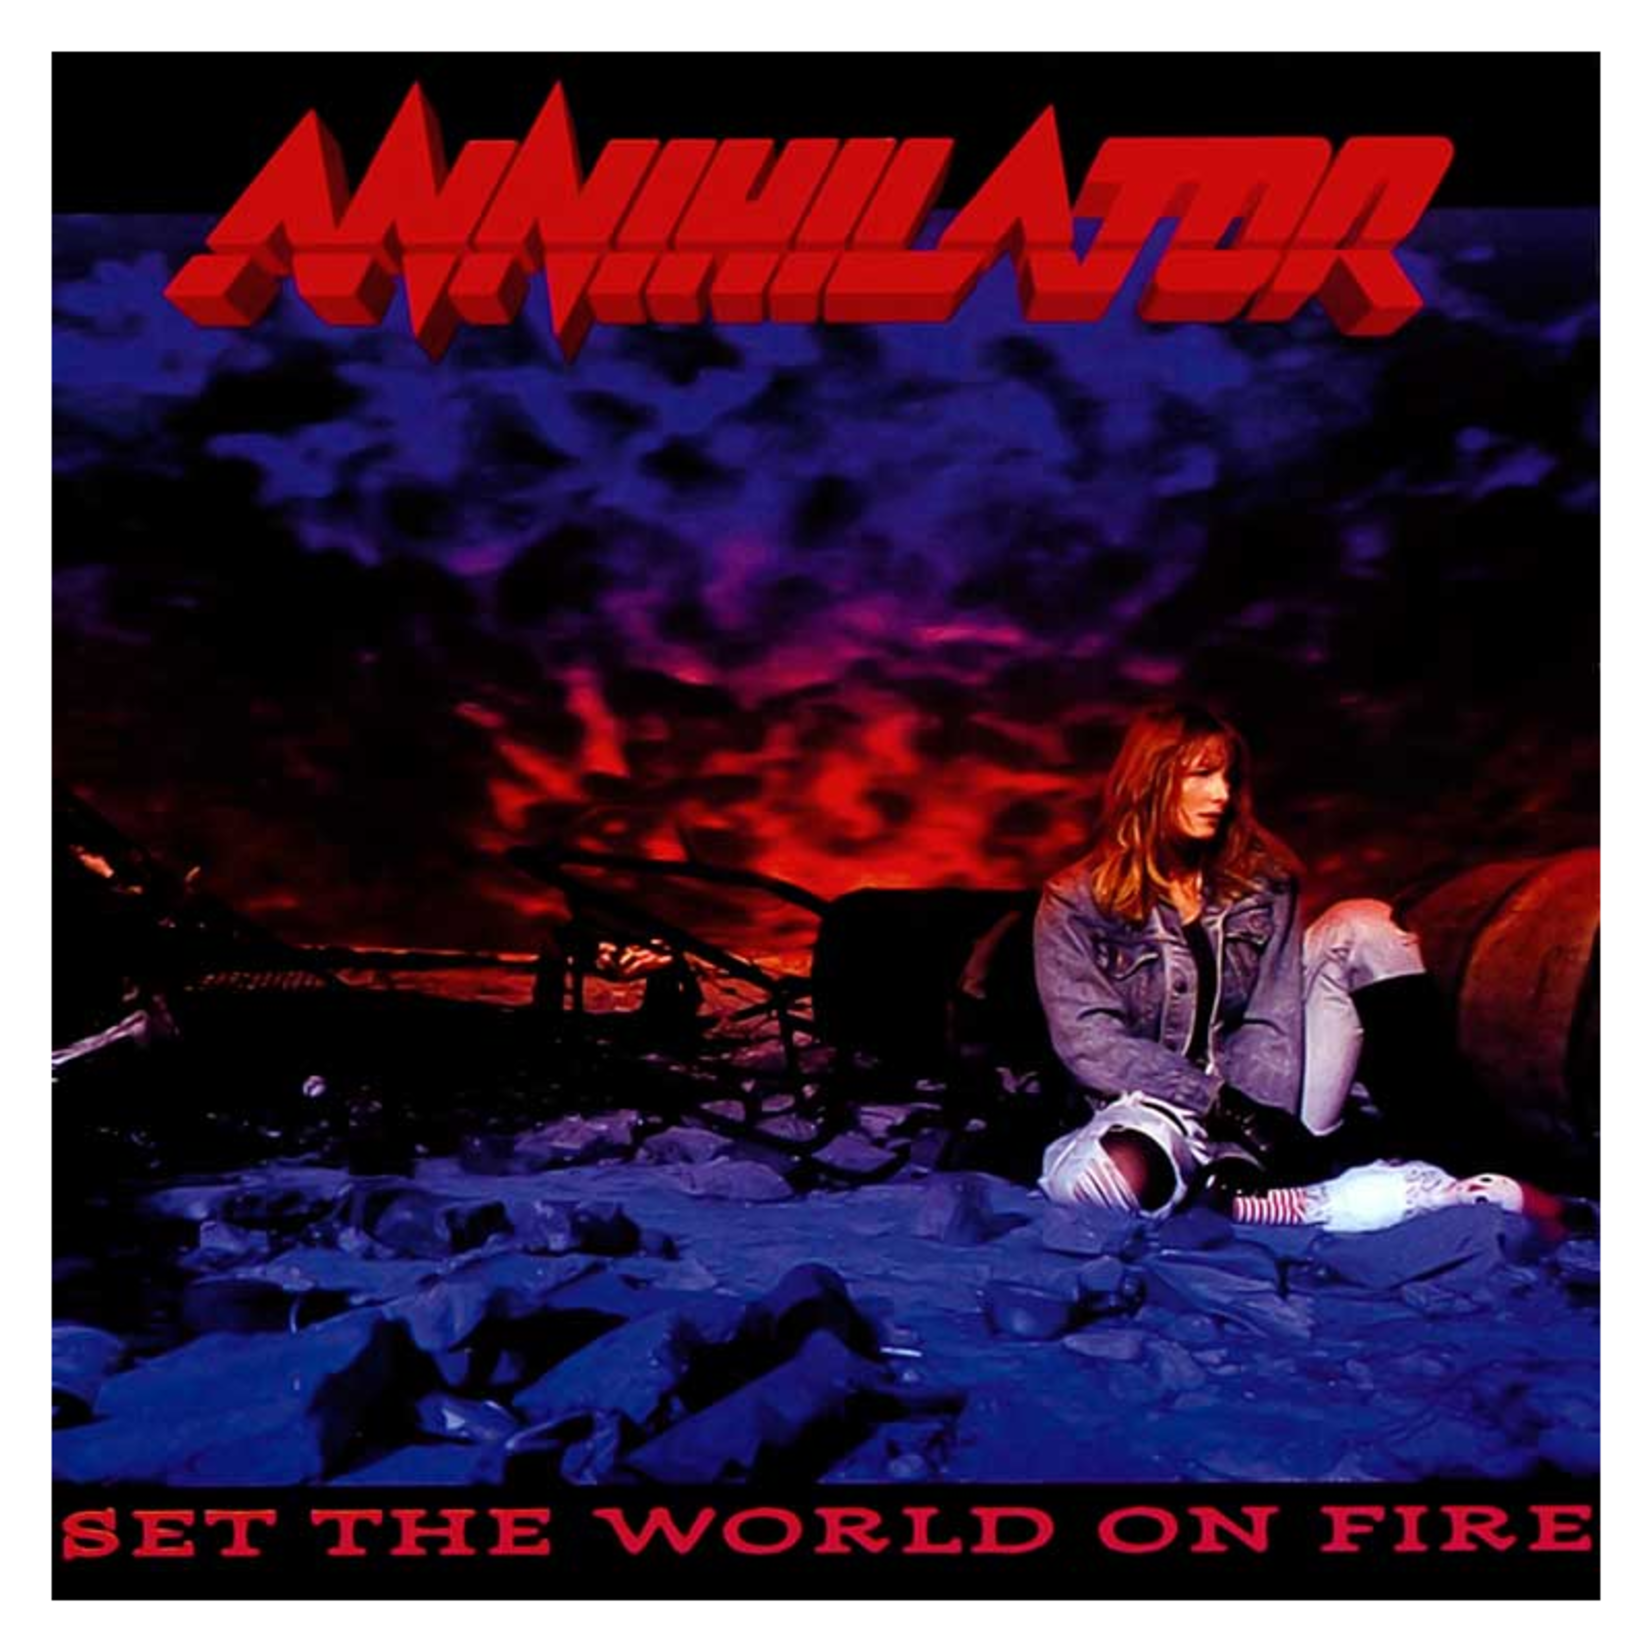 ANNIHILATOR - set the world on fire LP